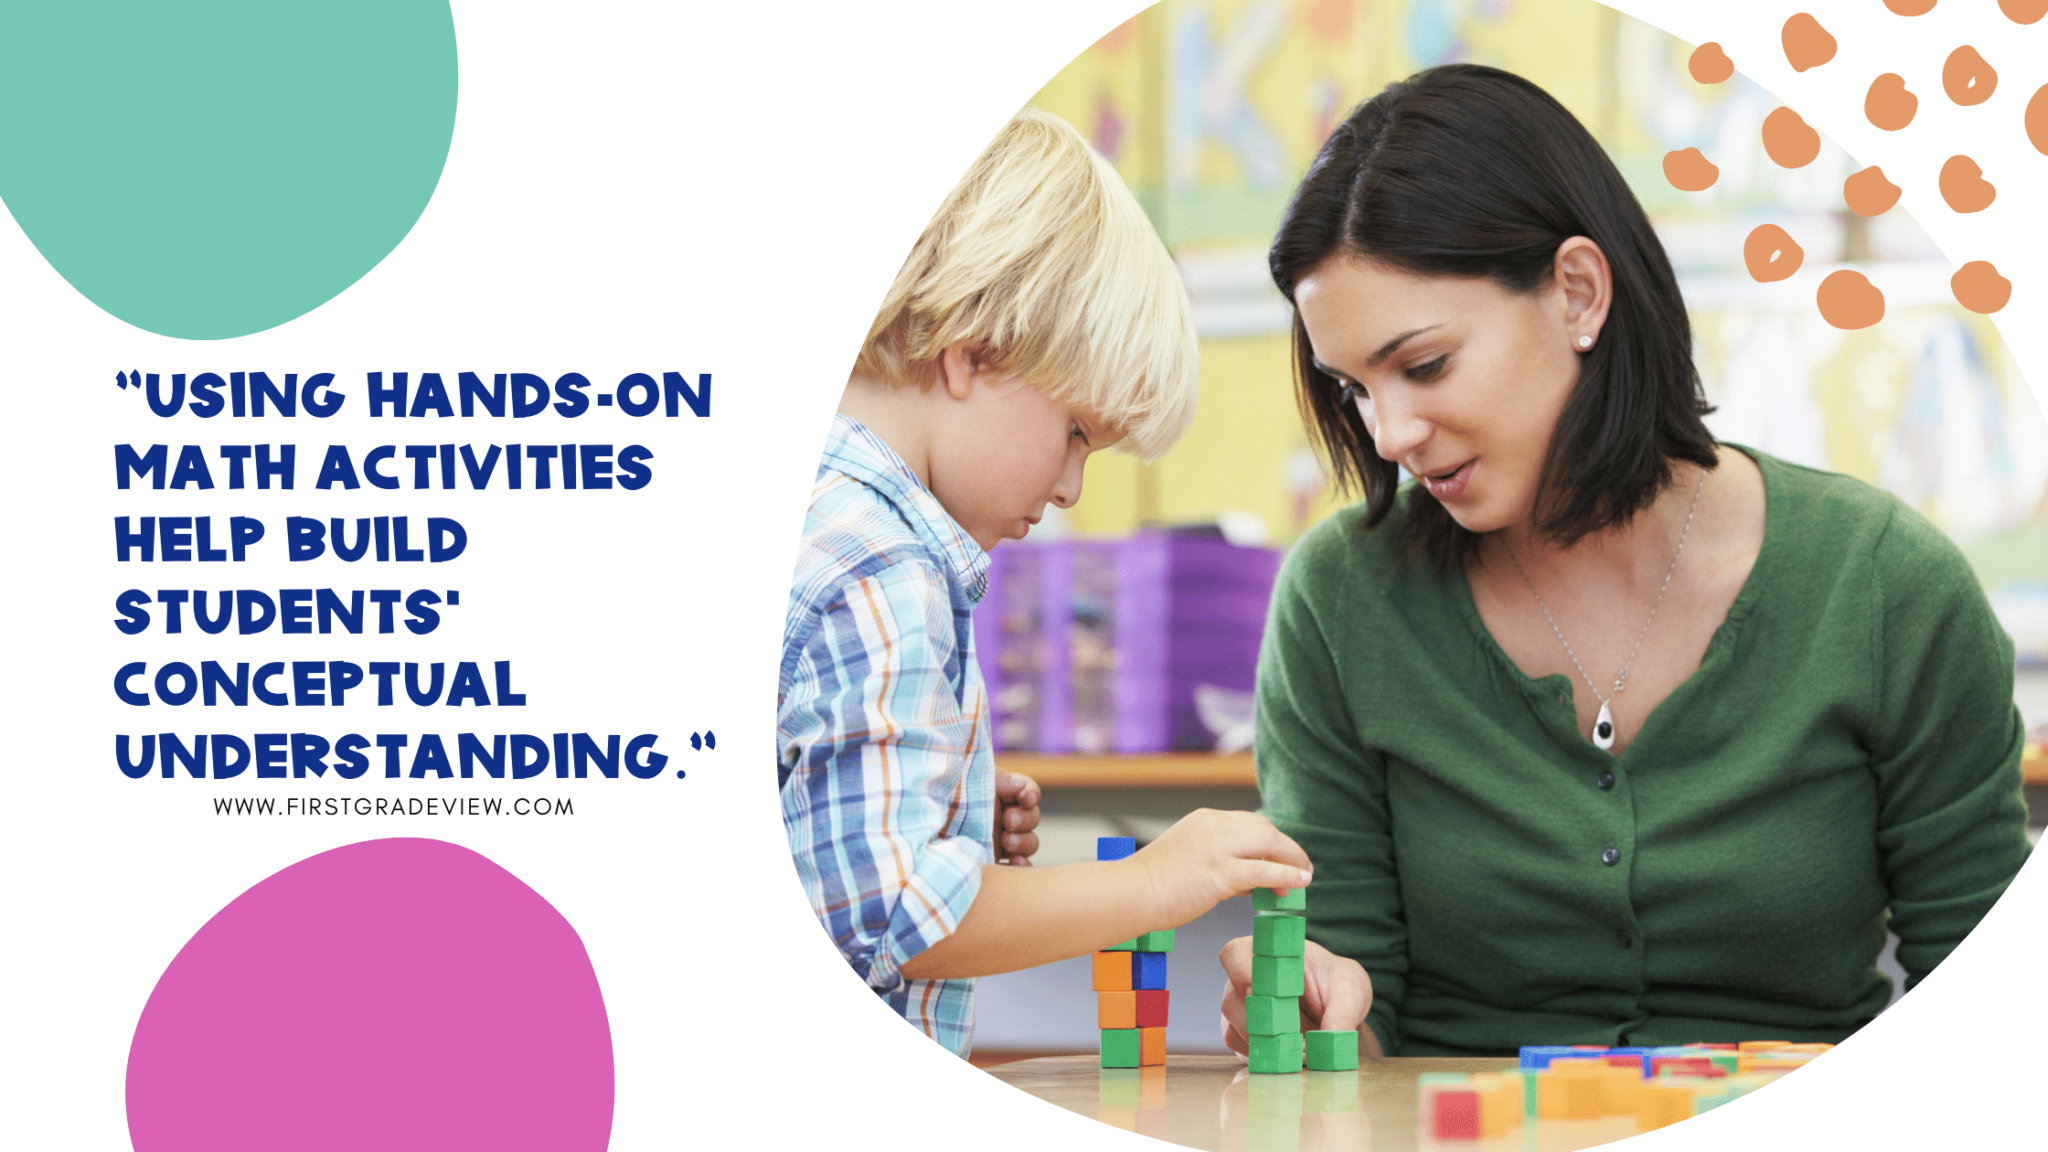 Image of quote, "Using hands-on math activities help build students' conceptual understanding."